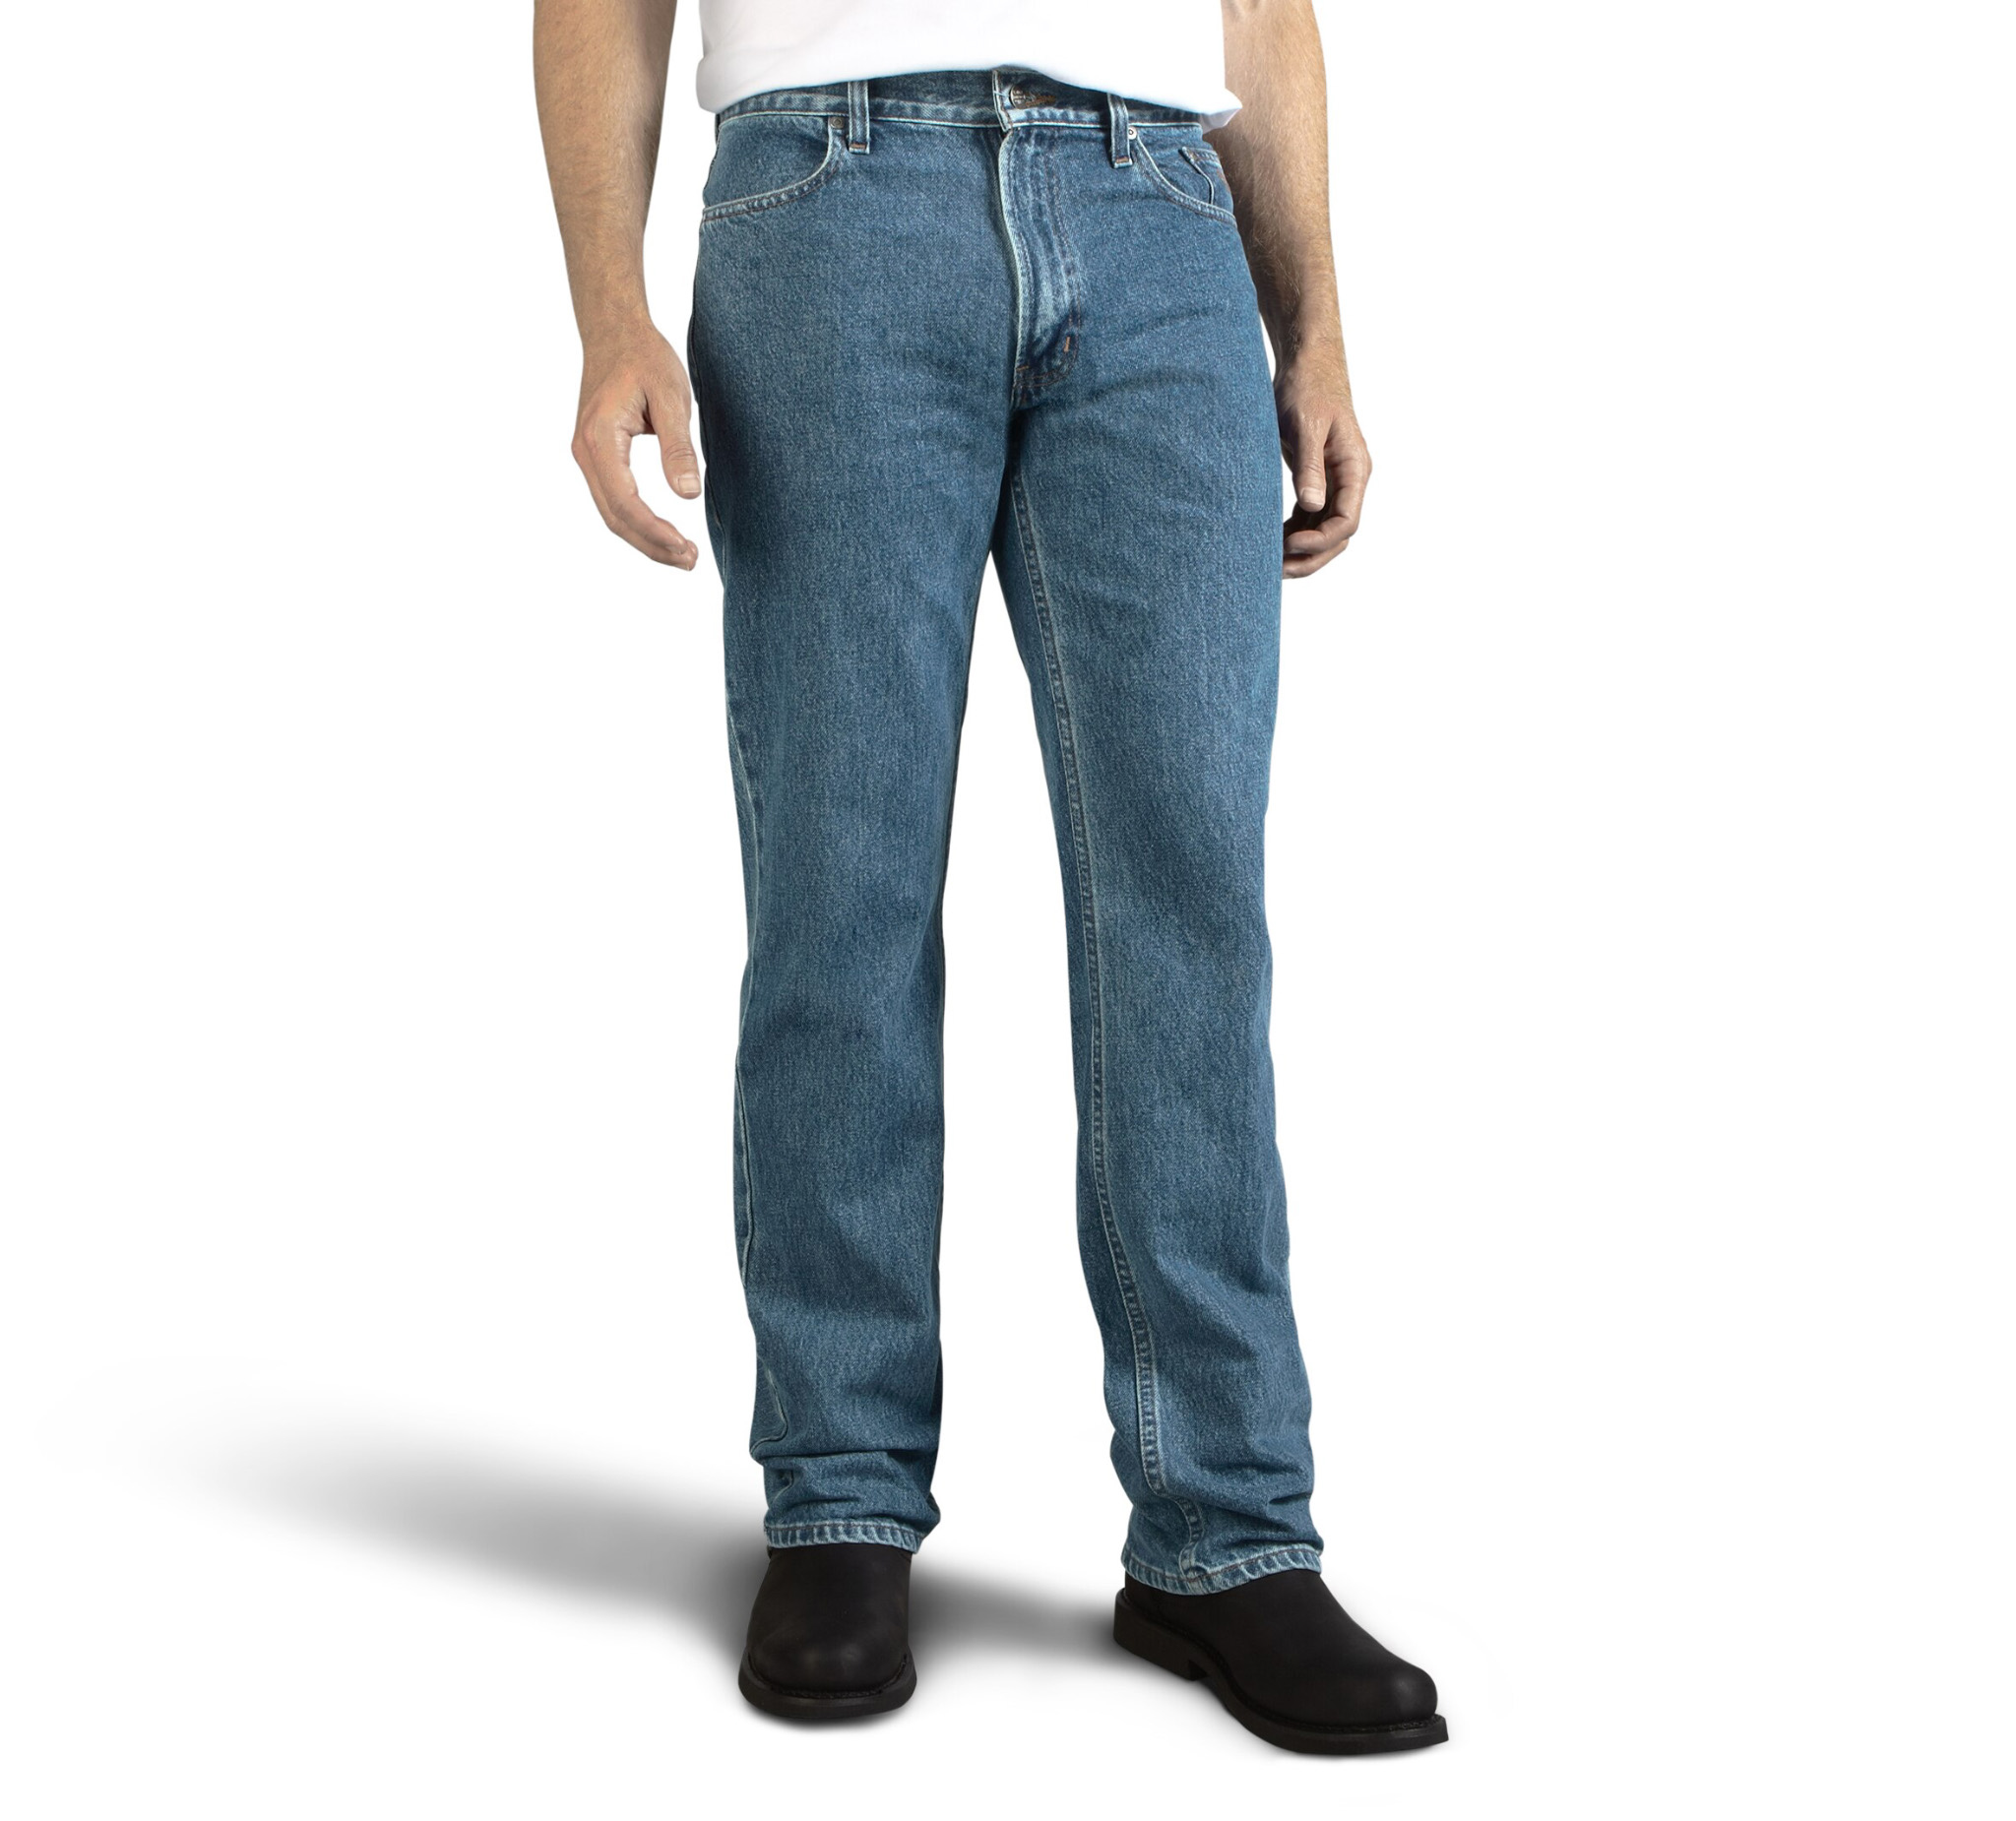 harley davidson kevlar jeans